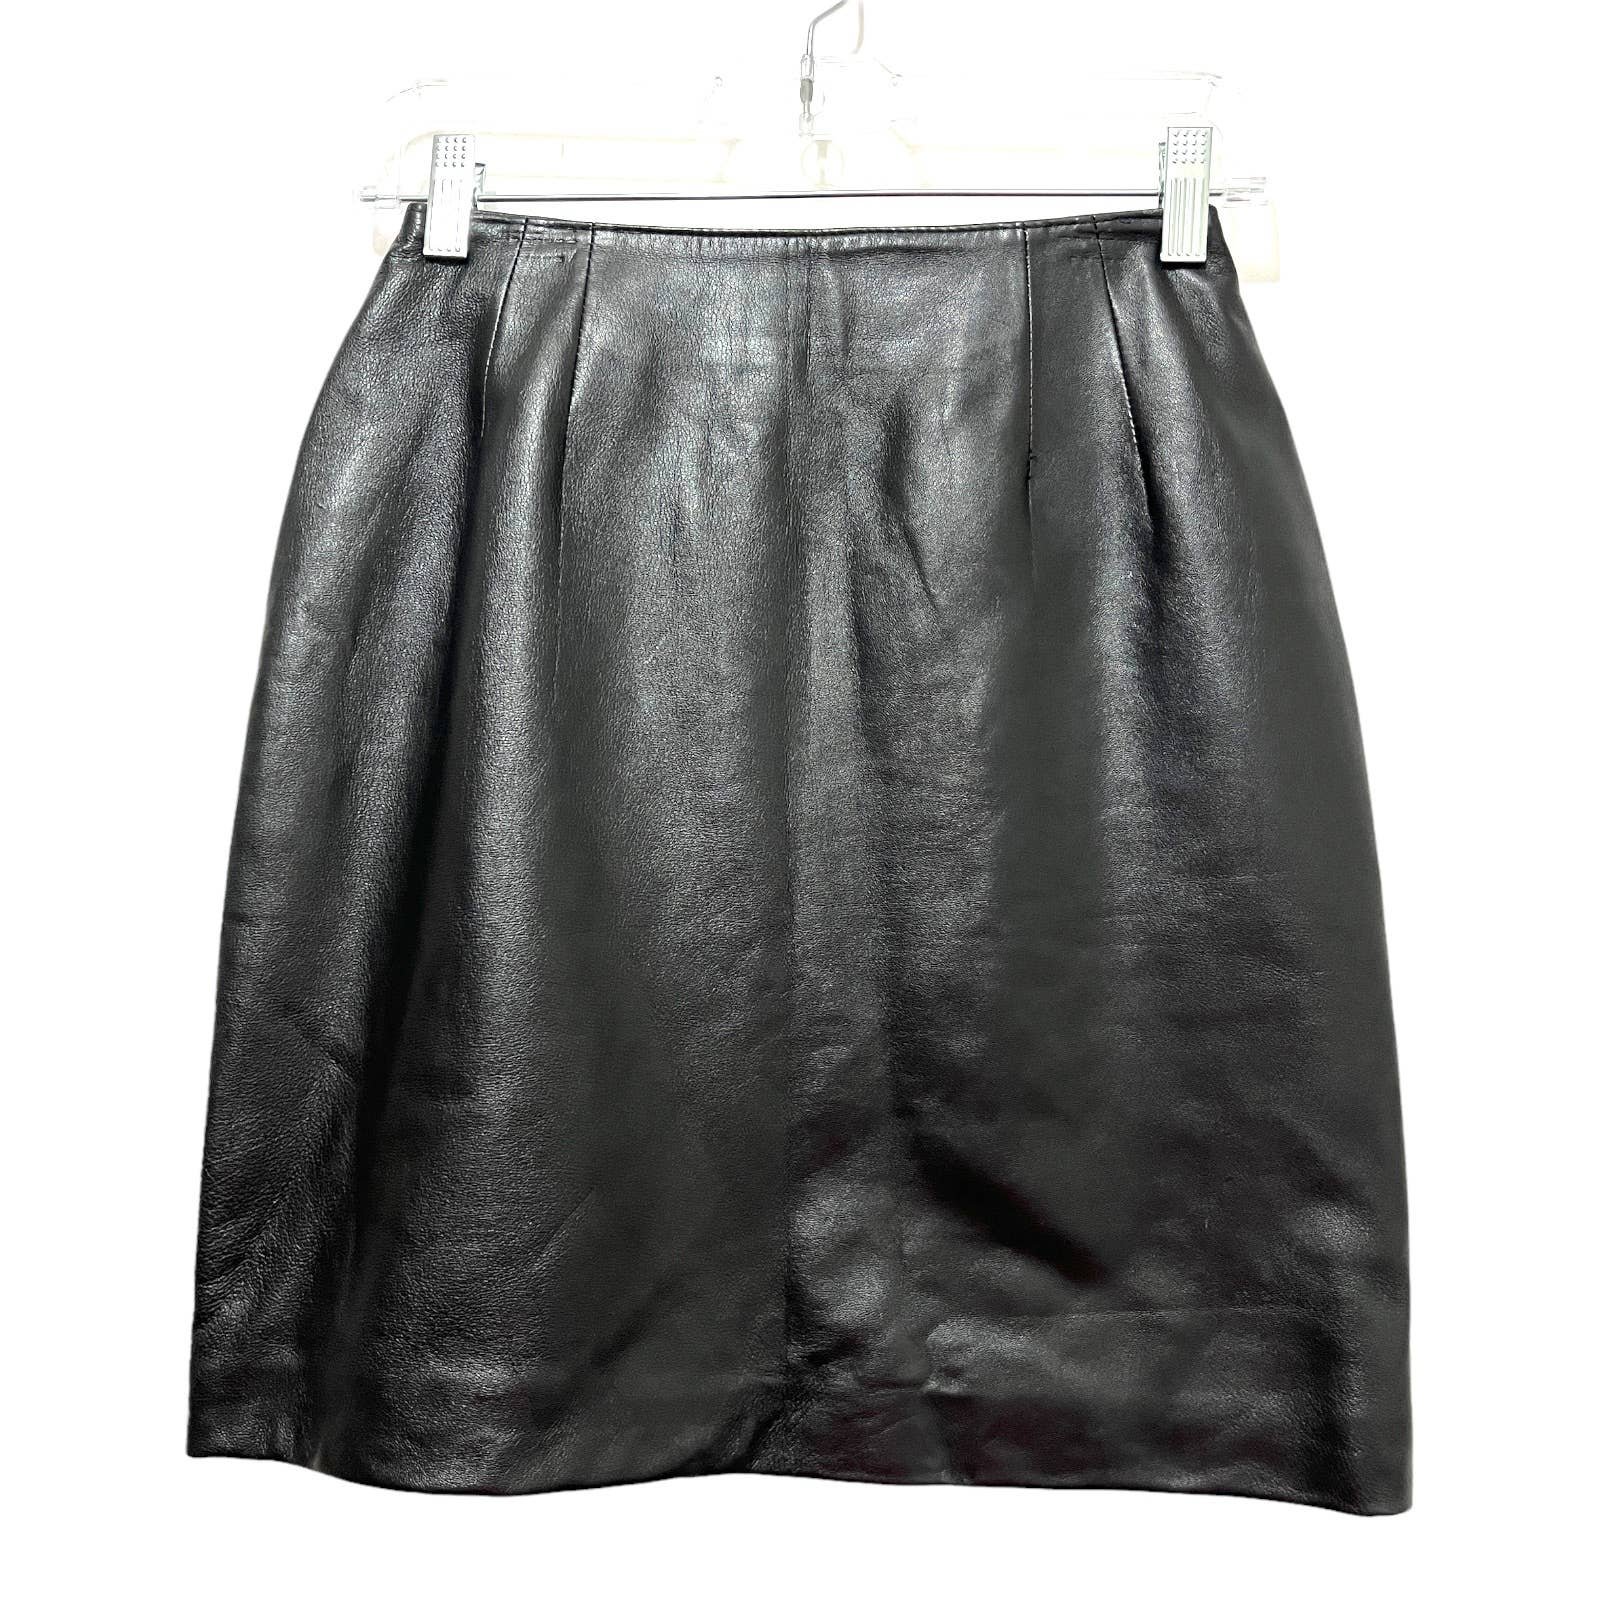 Affordable Margaret Godfrey Leather Skirt Size 6 Black 